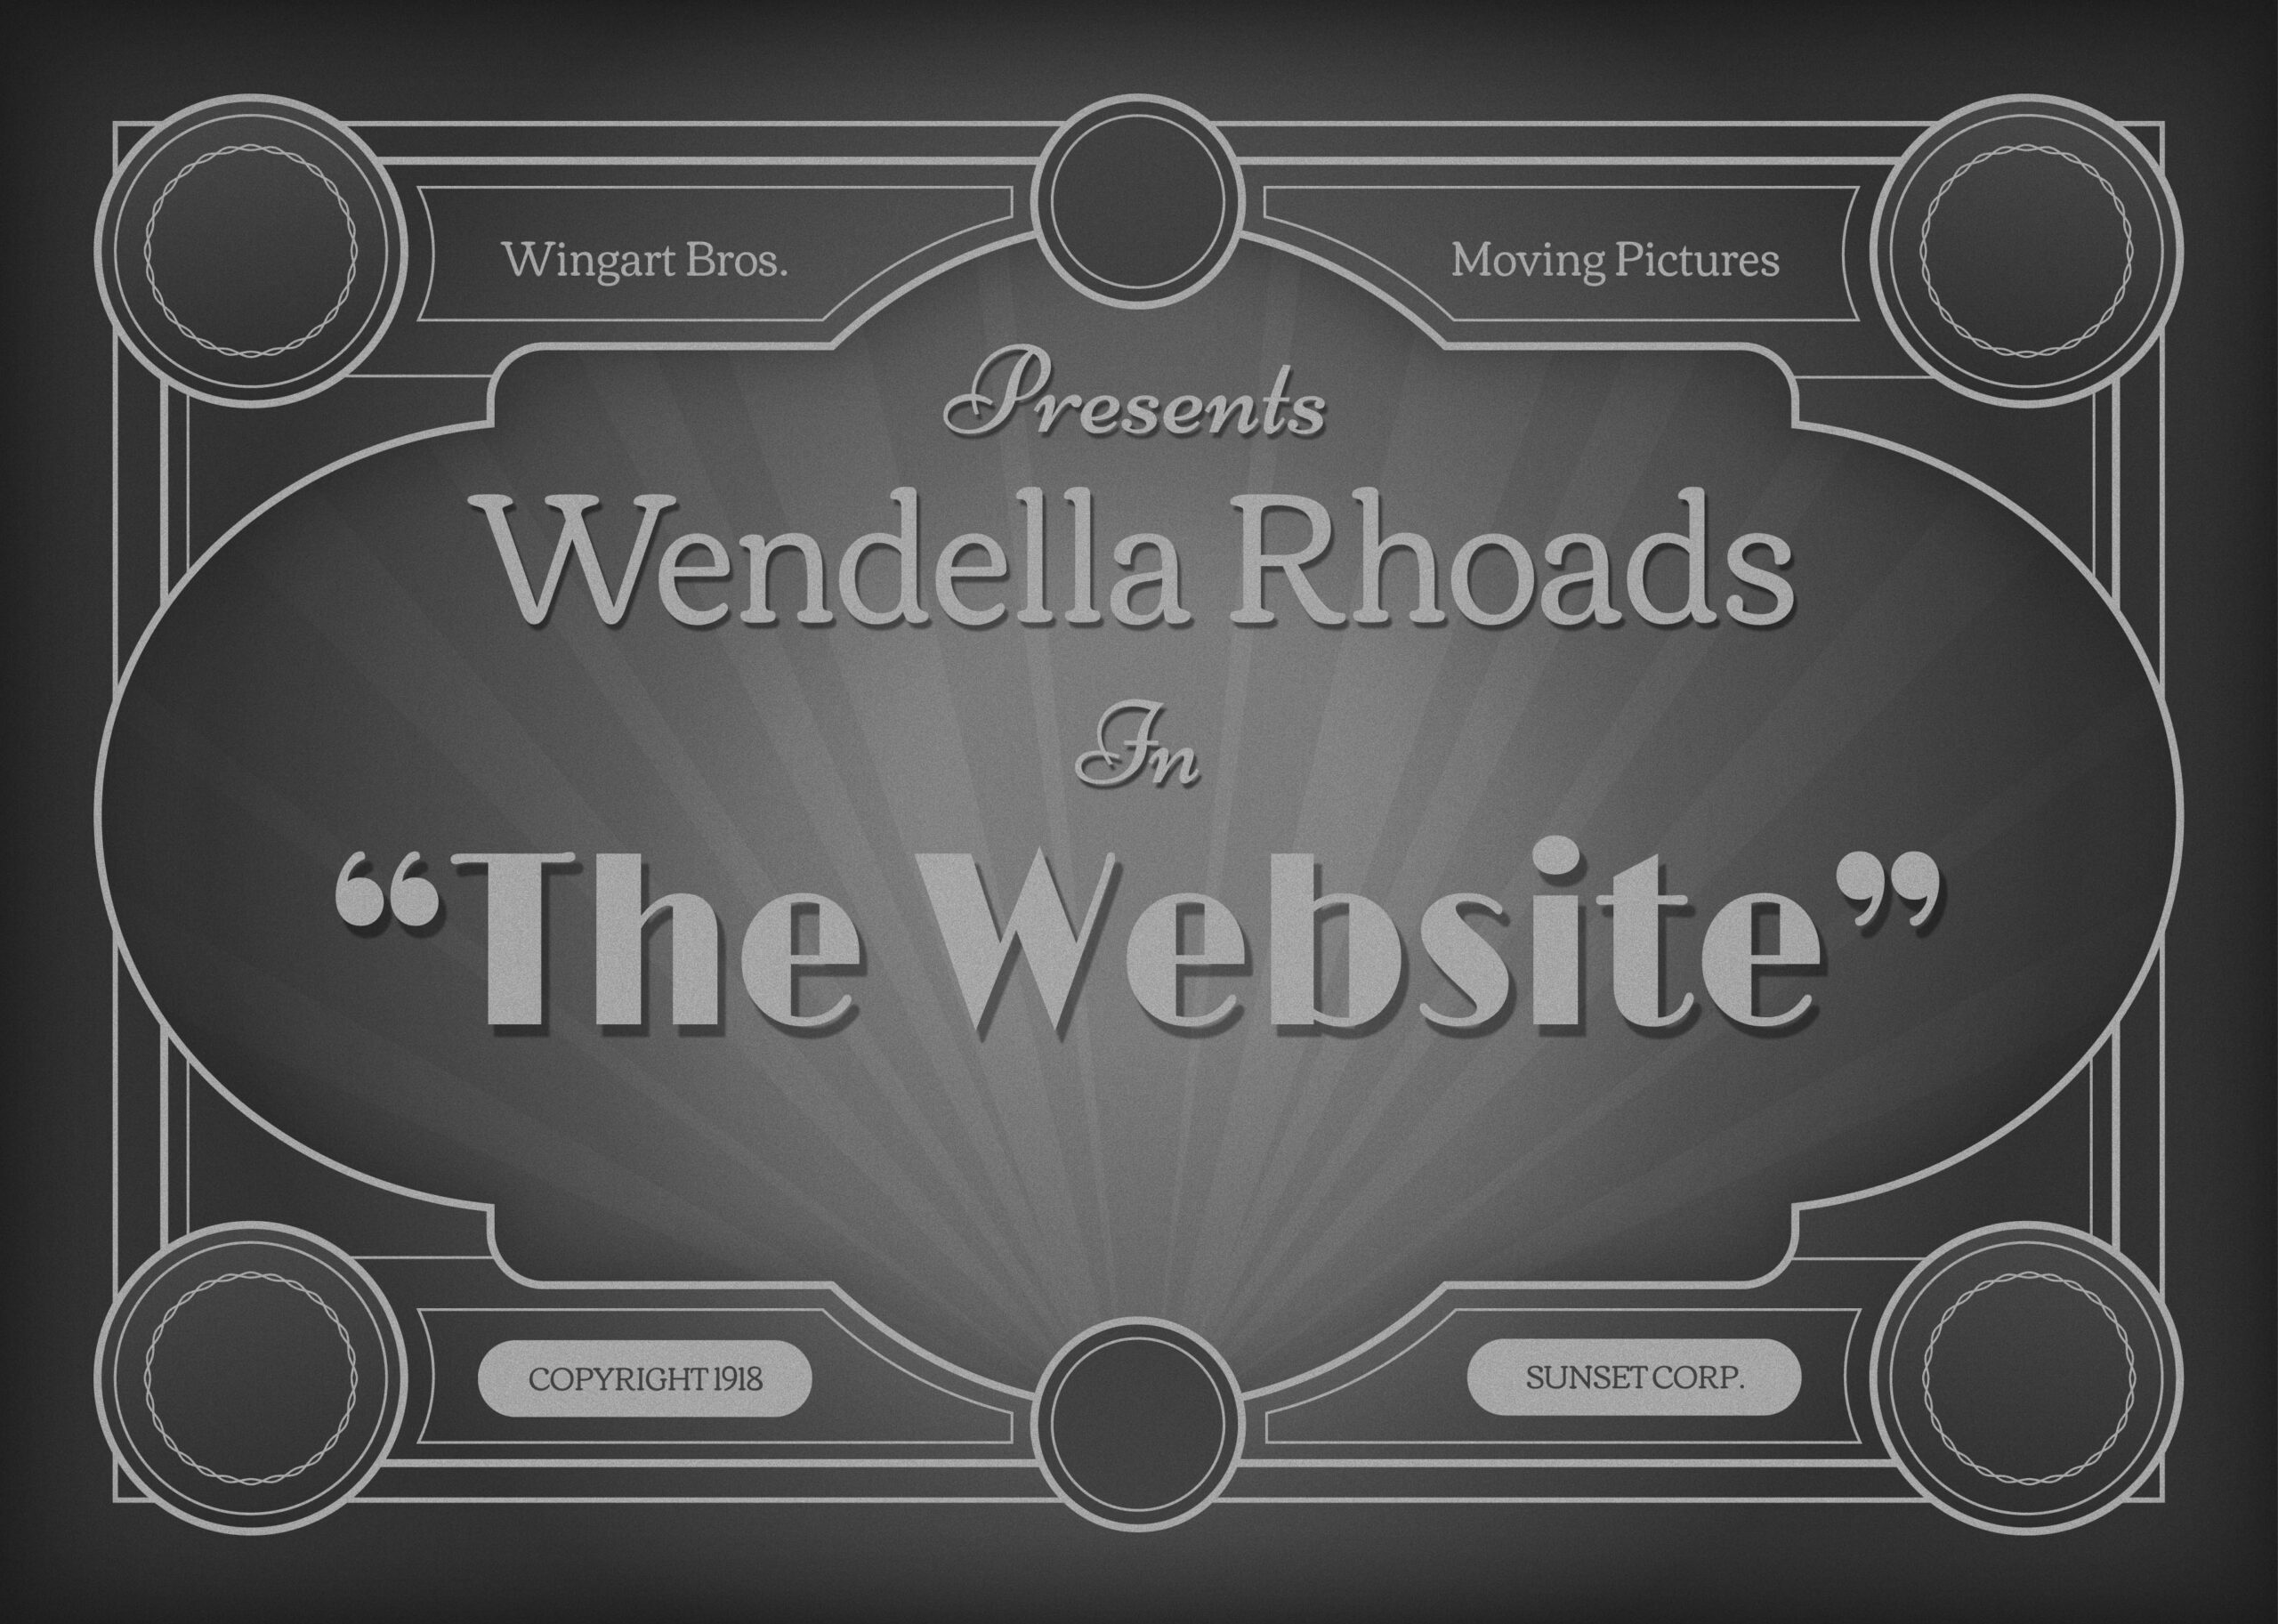 www.wendellarhoads.com